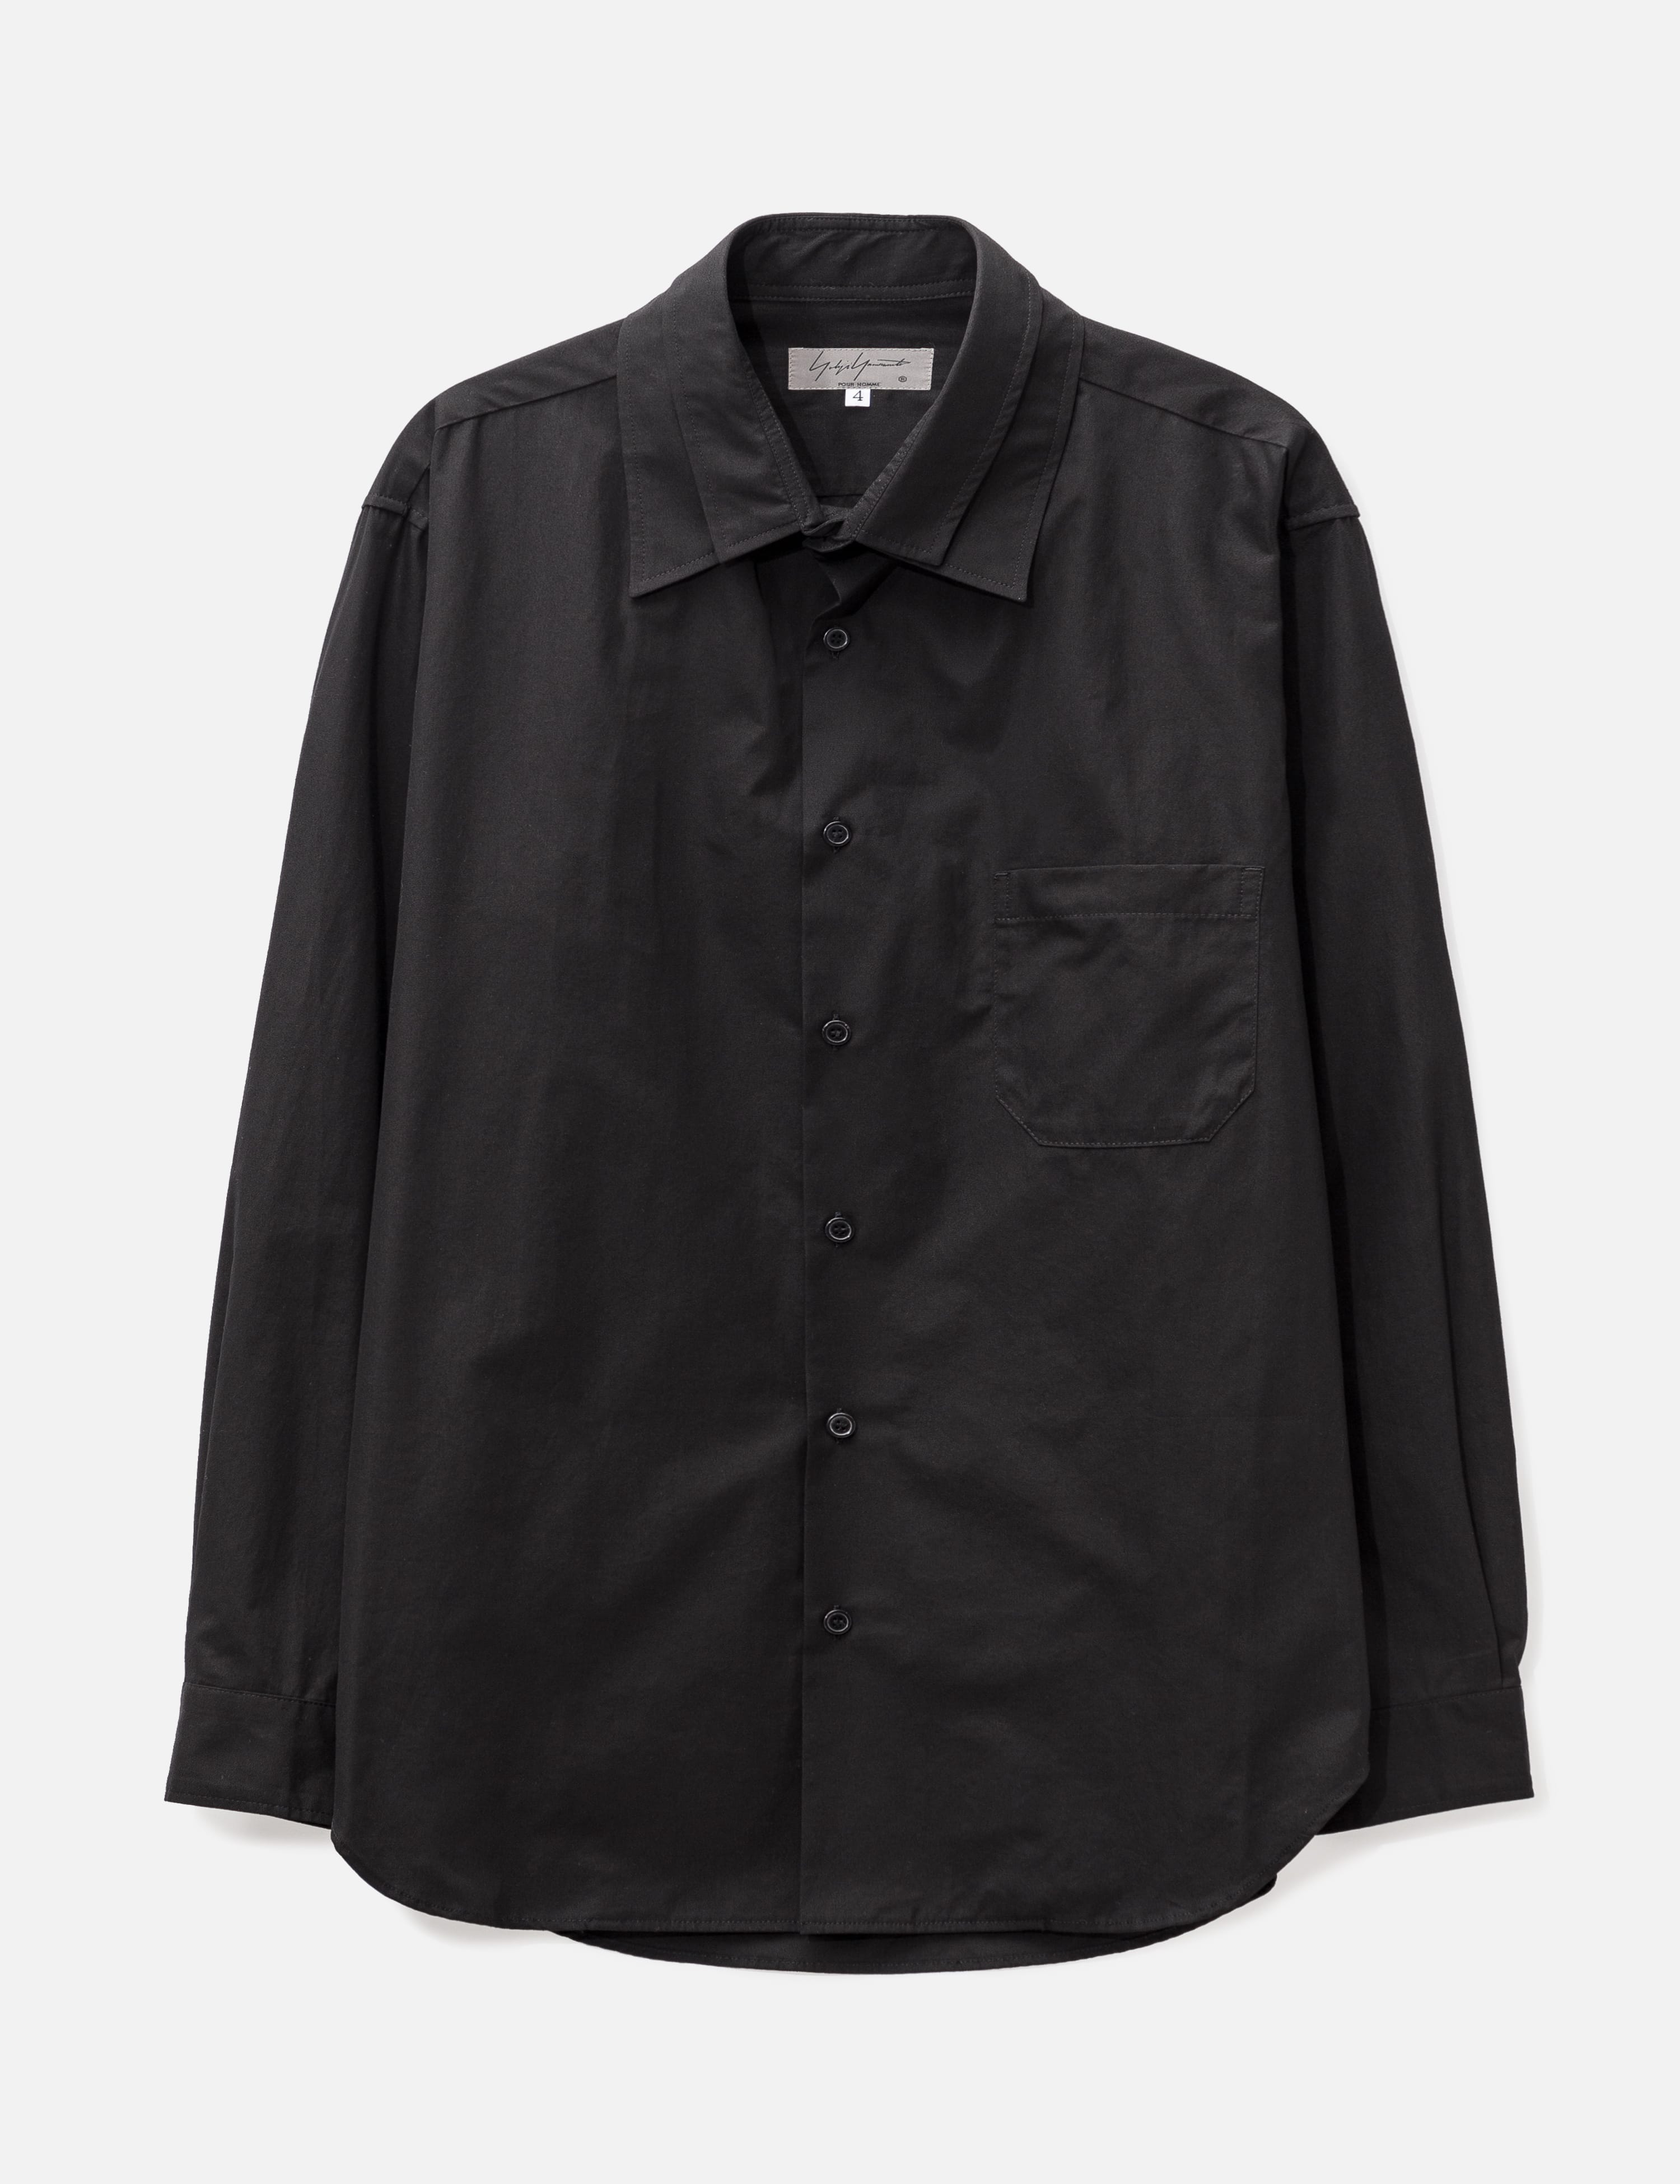 Yohji Yamamoto Pour Homme Double Collar Shirt | HBX - Globally